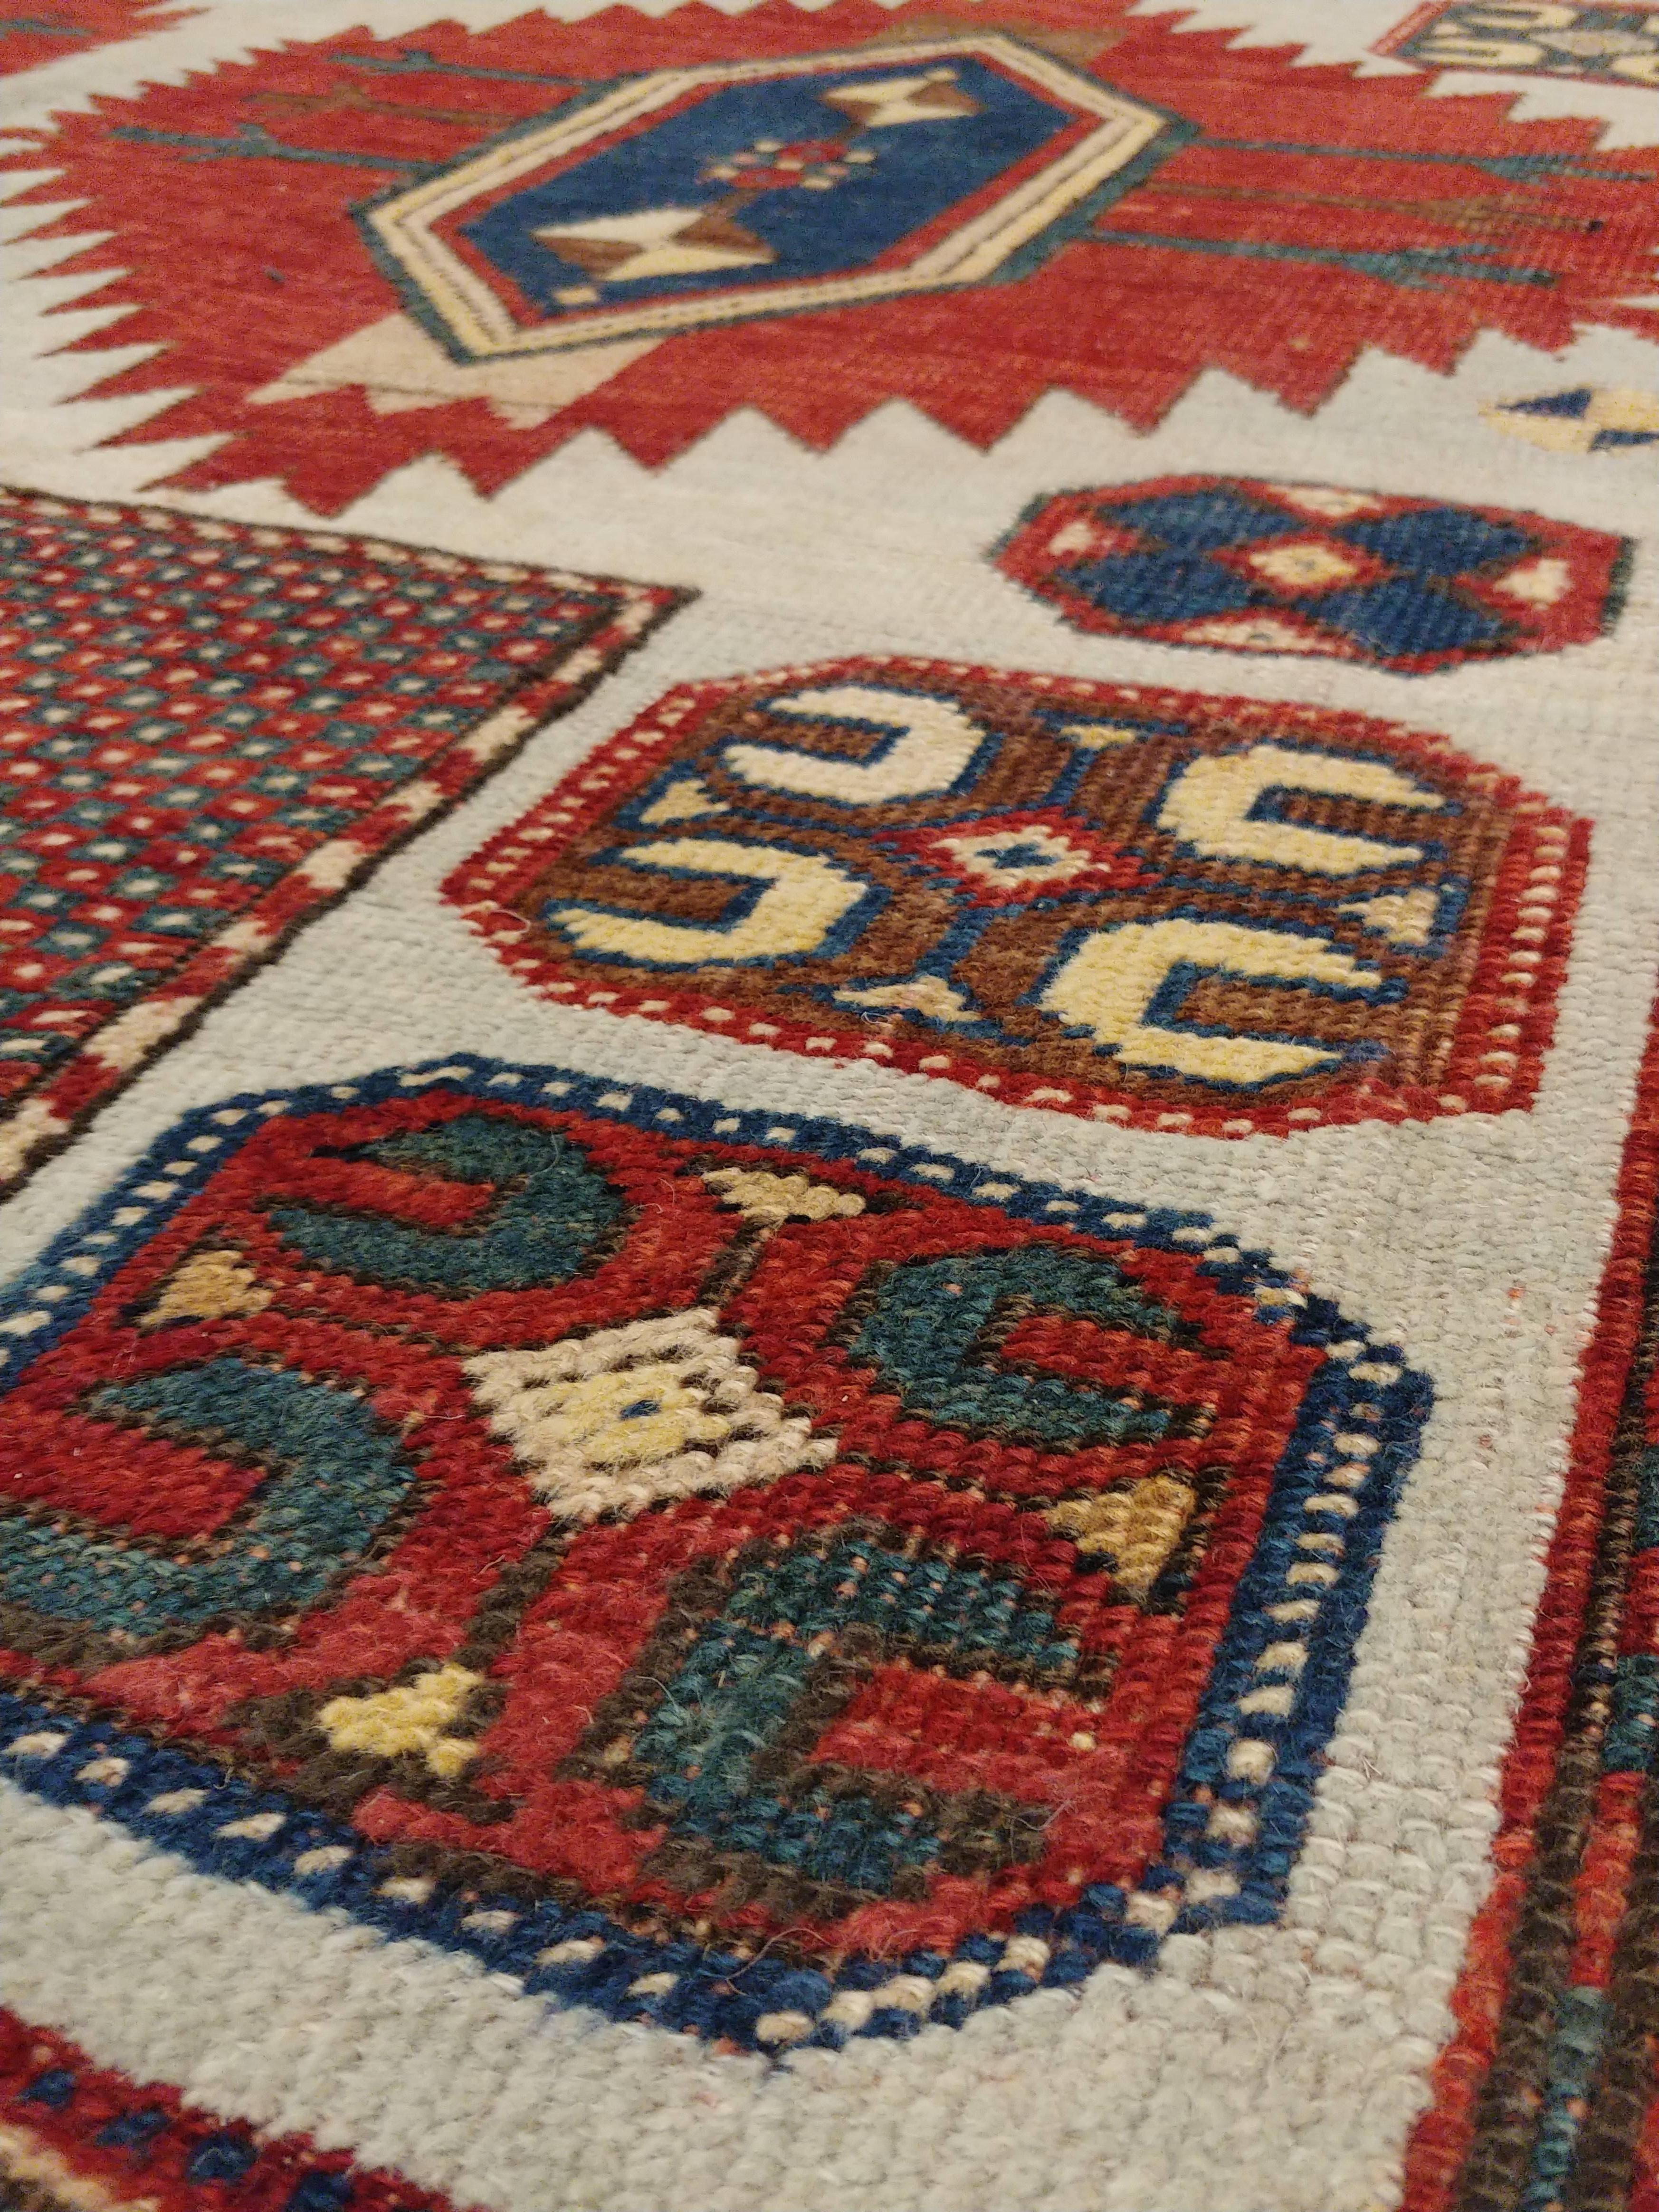 Antique Karachov Kazak Carpet, Handmade Wool, Pale Blue, Rust, Ivory, Geometric In Good Condition For Sale In Port Washington, NY